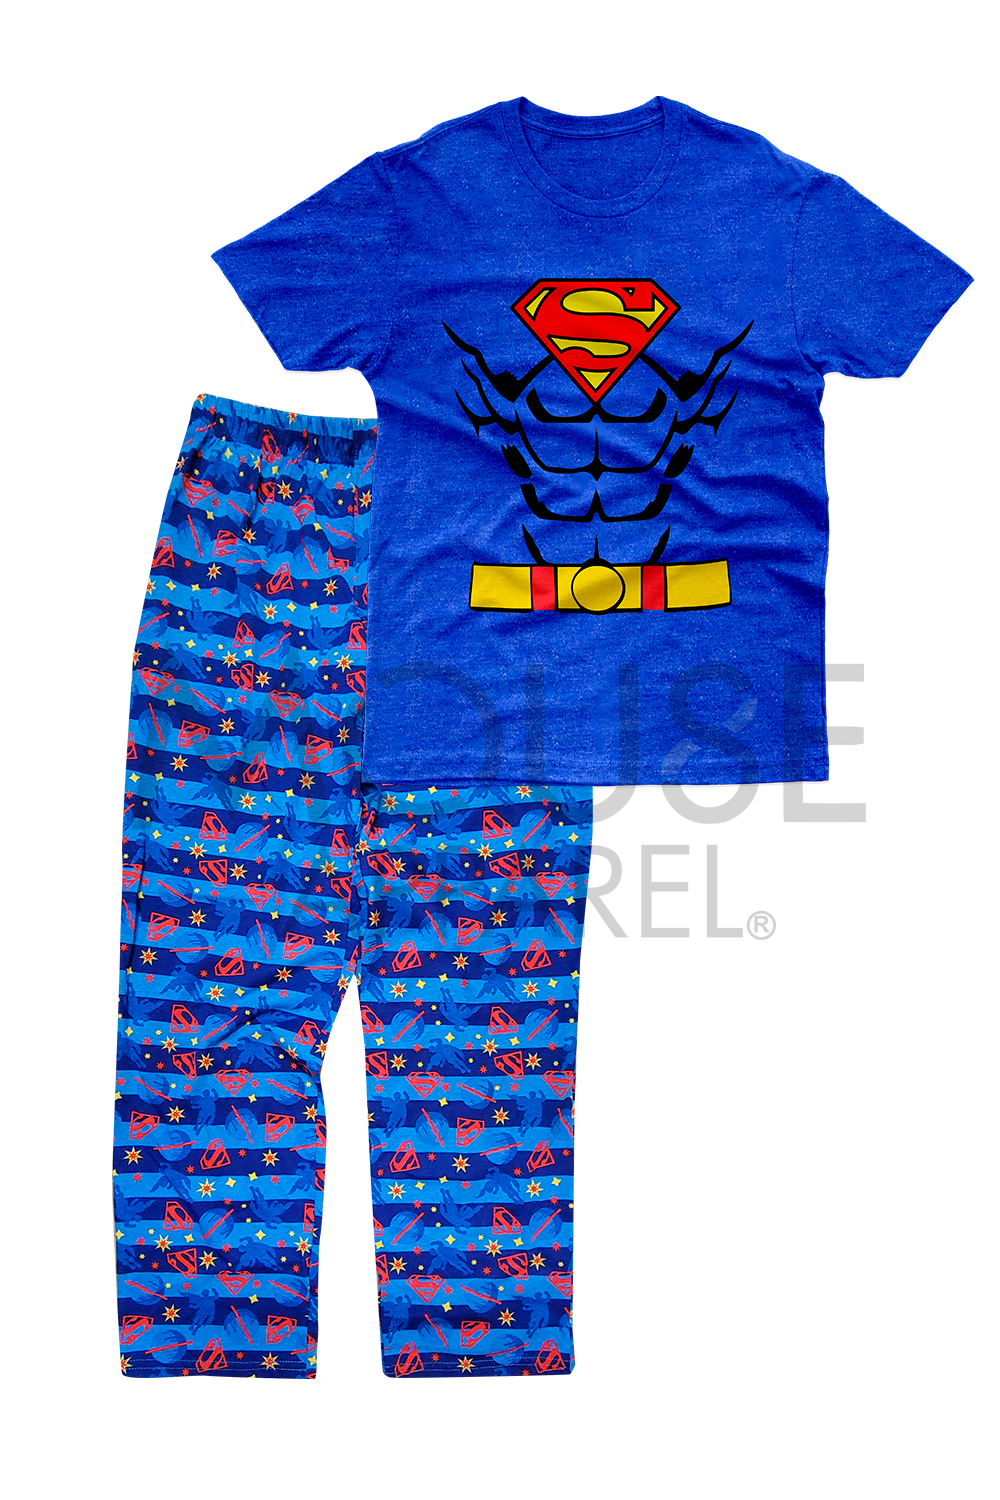 Pijama Caballero manga corta. Superman